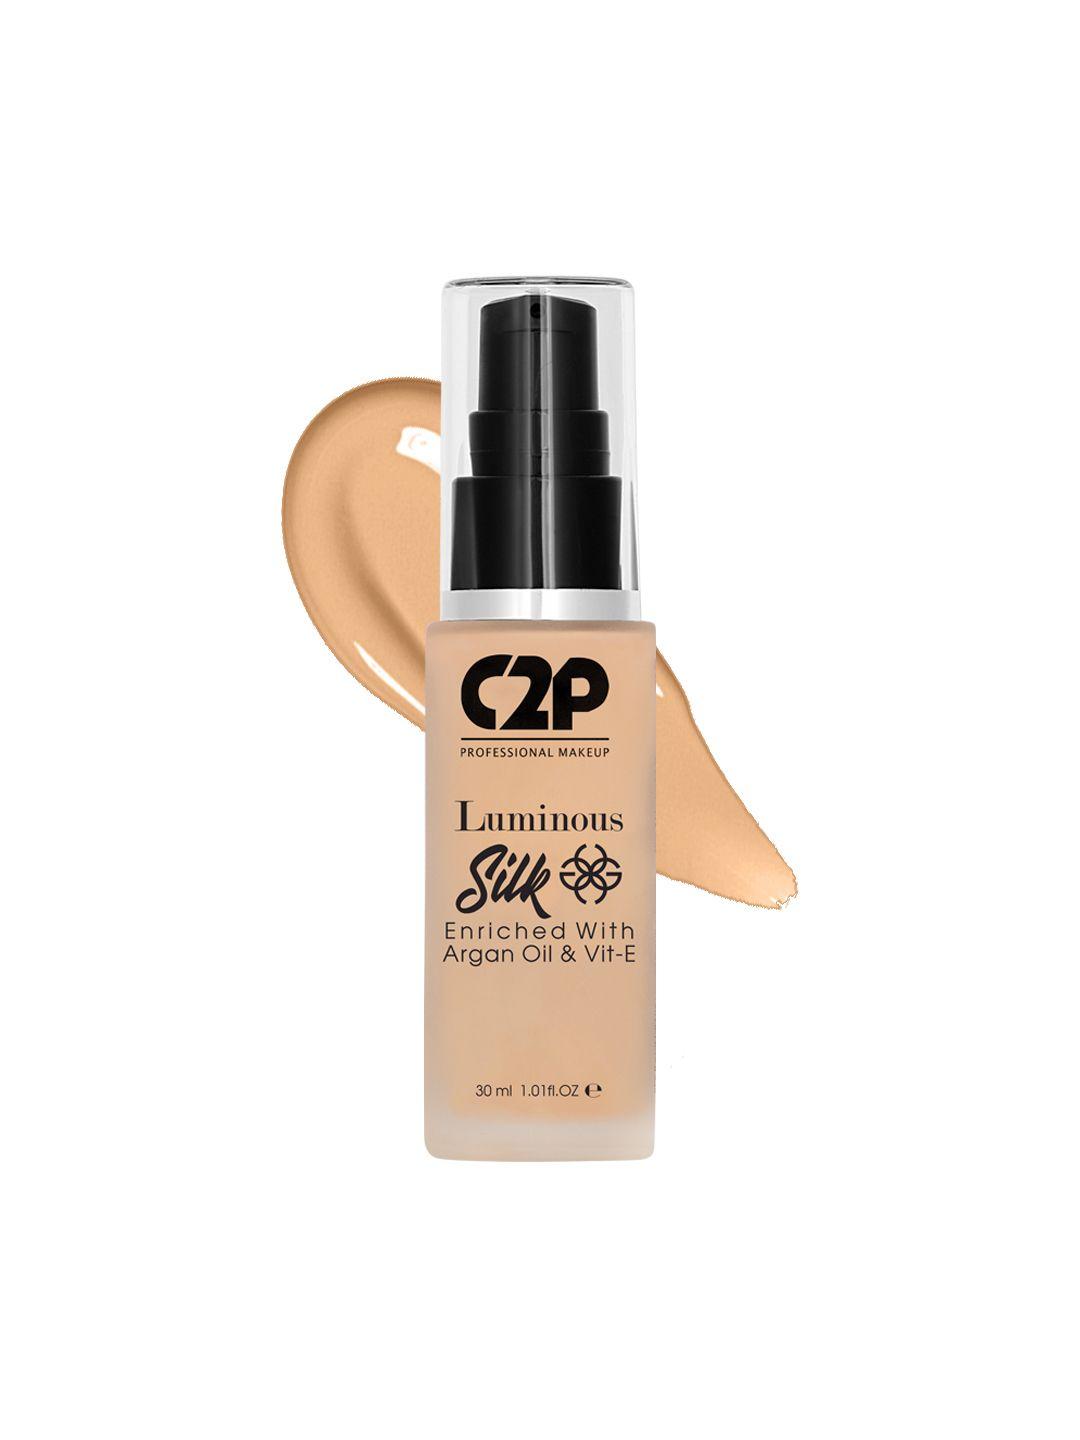 c2p professional makeup luminous silk foundation 30 ml - medium tan 05